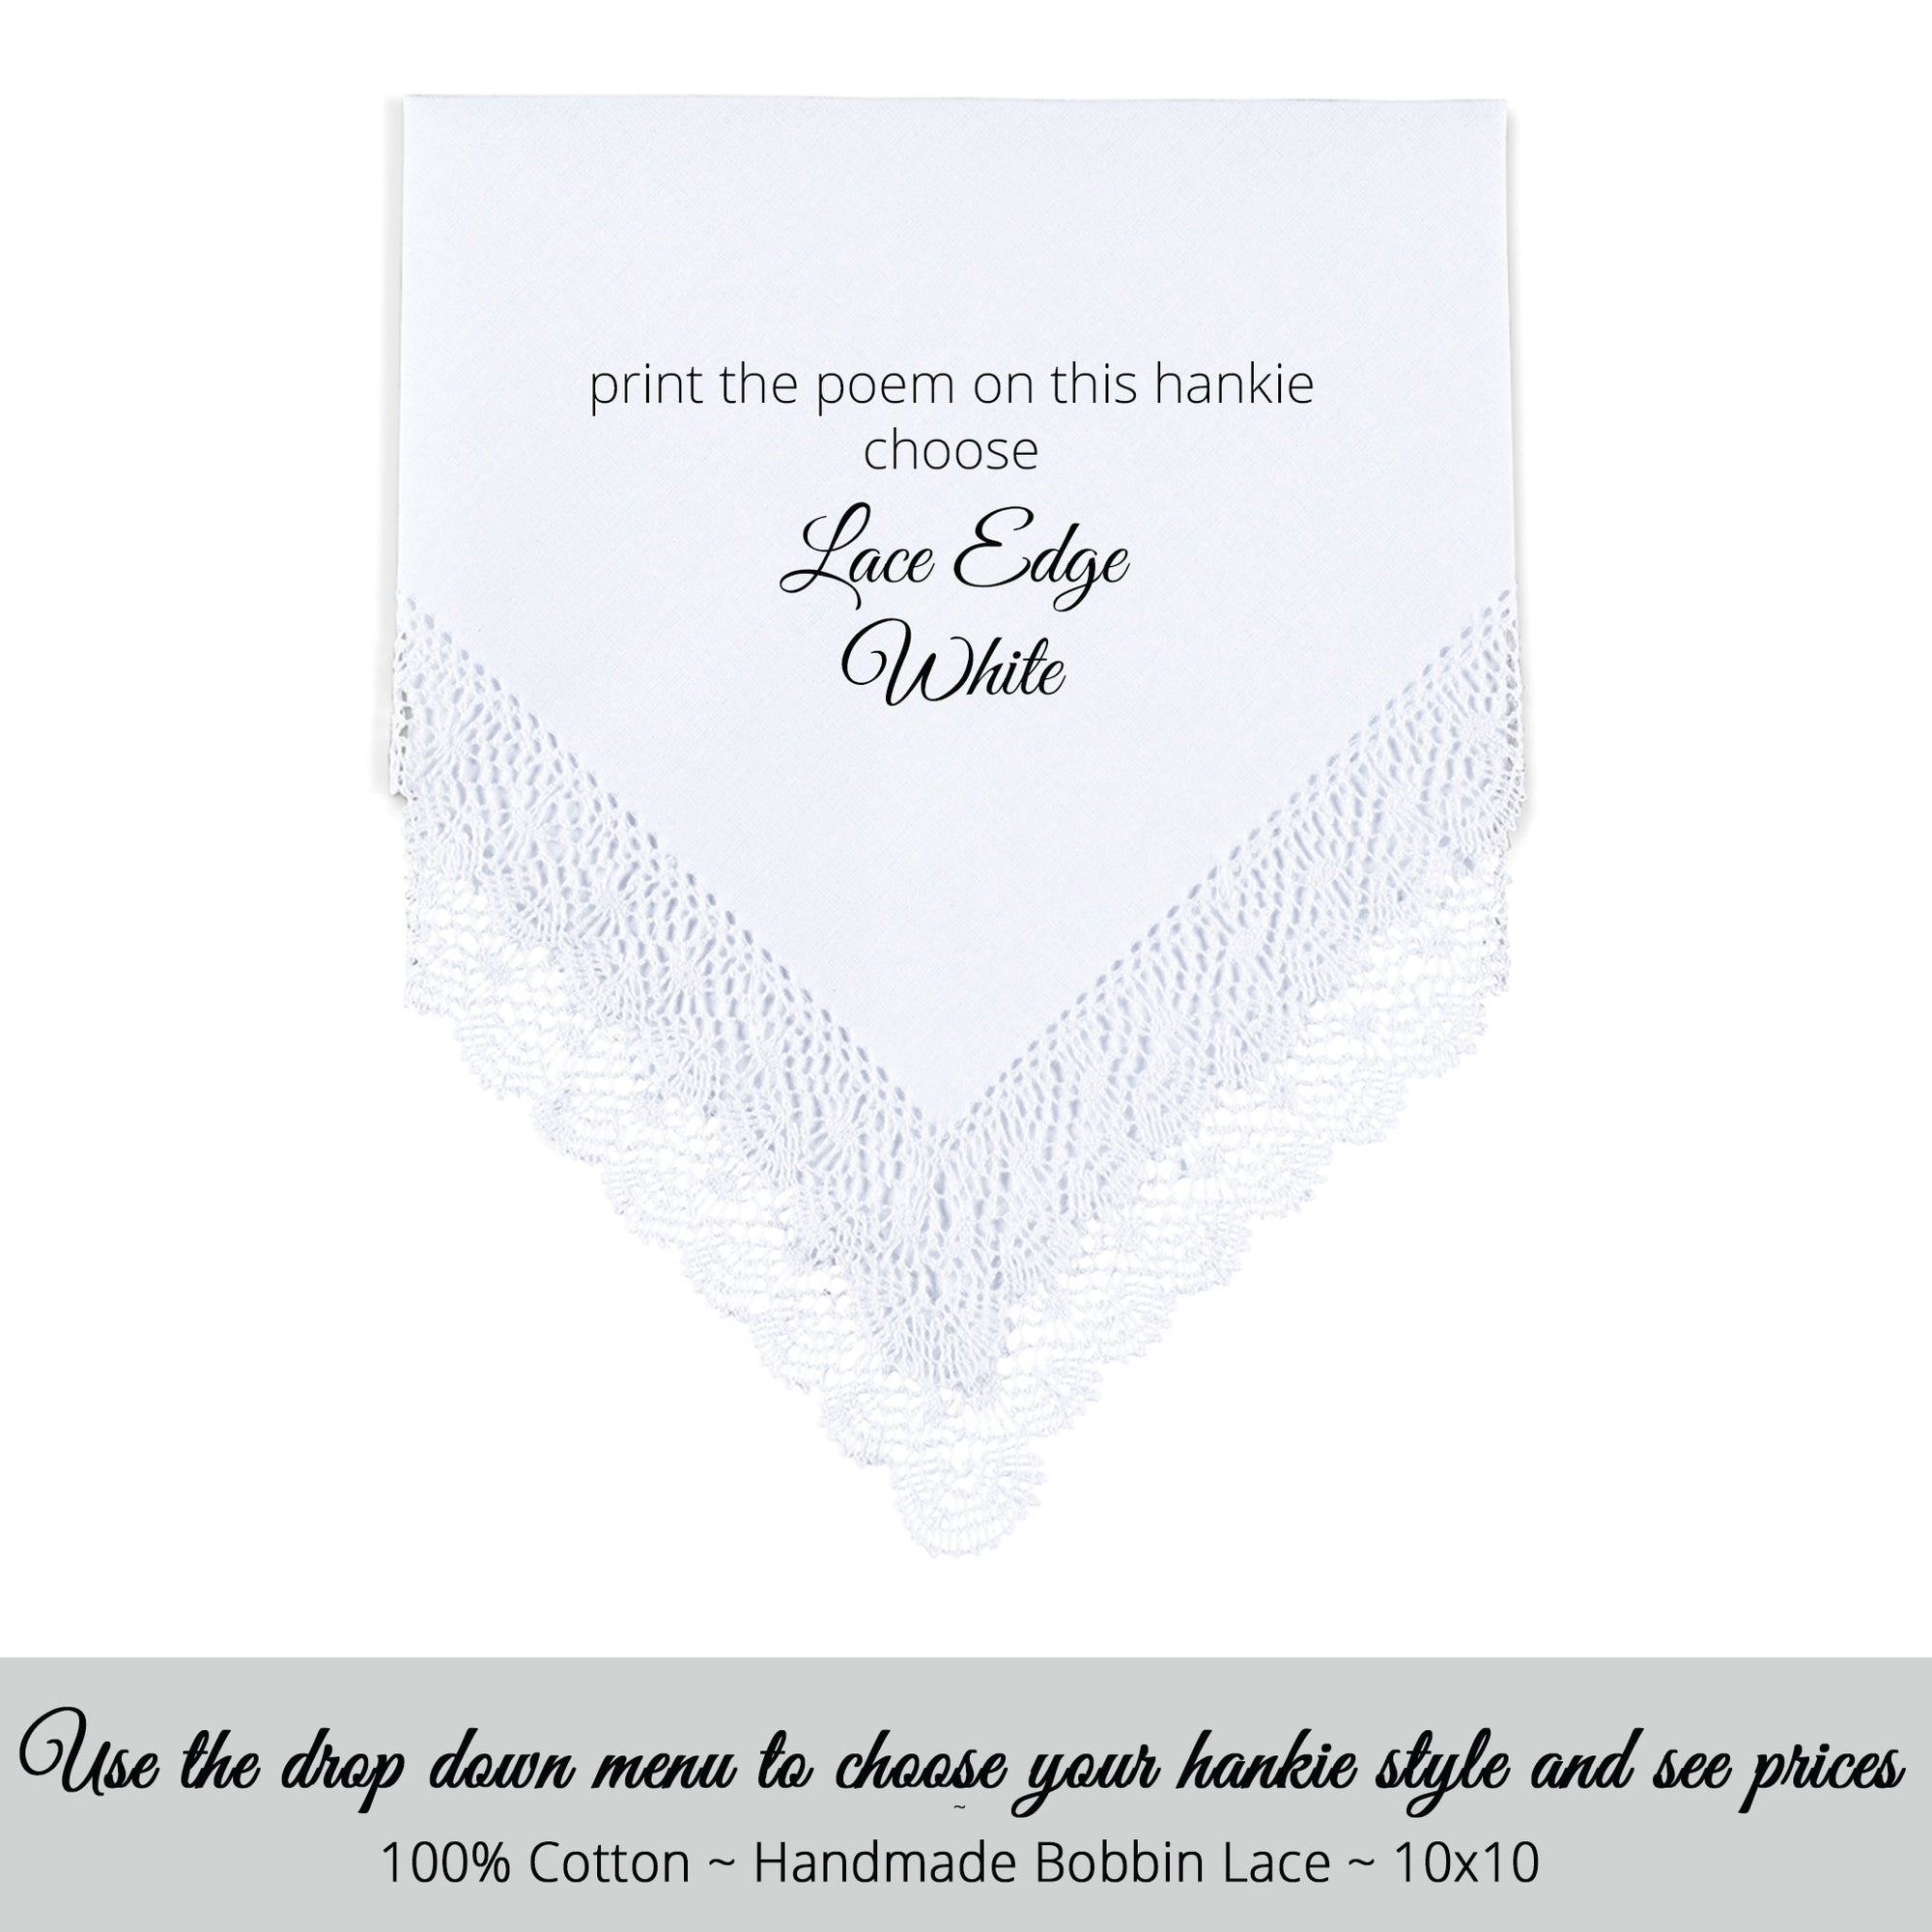 Wedding Handkerchief white with bobbin lace poem printed hankie for printed wedding hankie